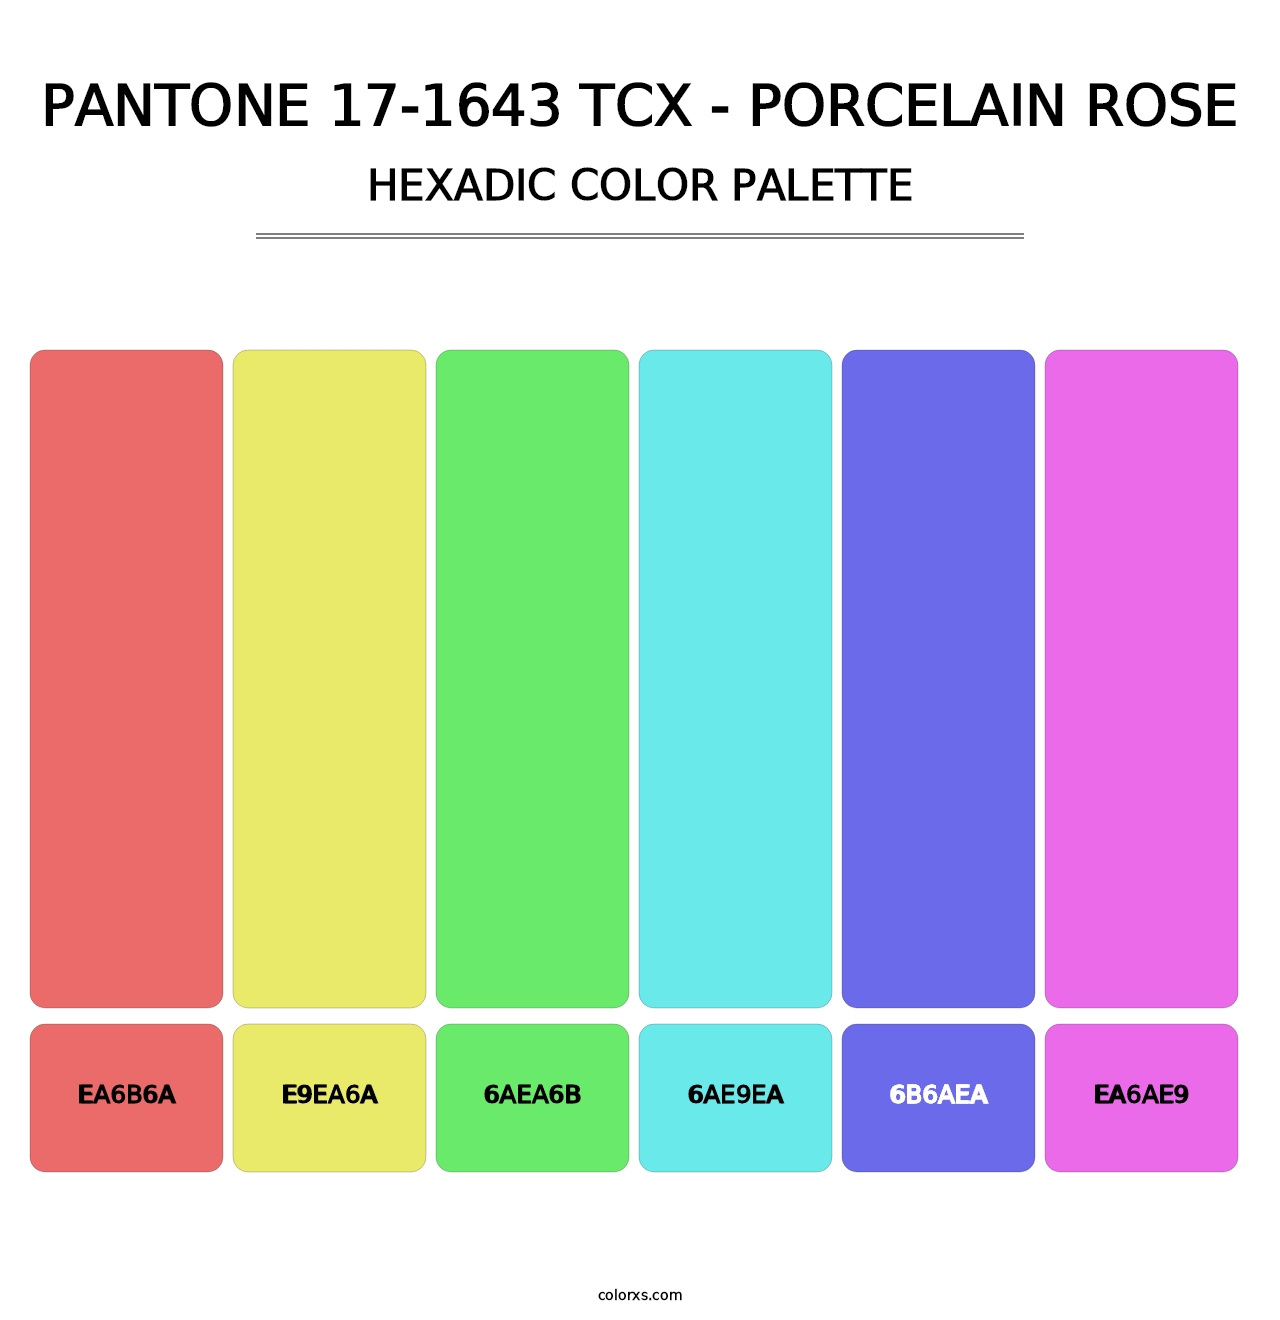 PANTONE 17-1643 TCX - Porcelain Rose - Hexadic Color Palette